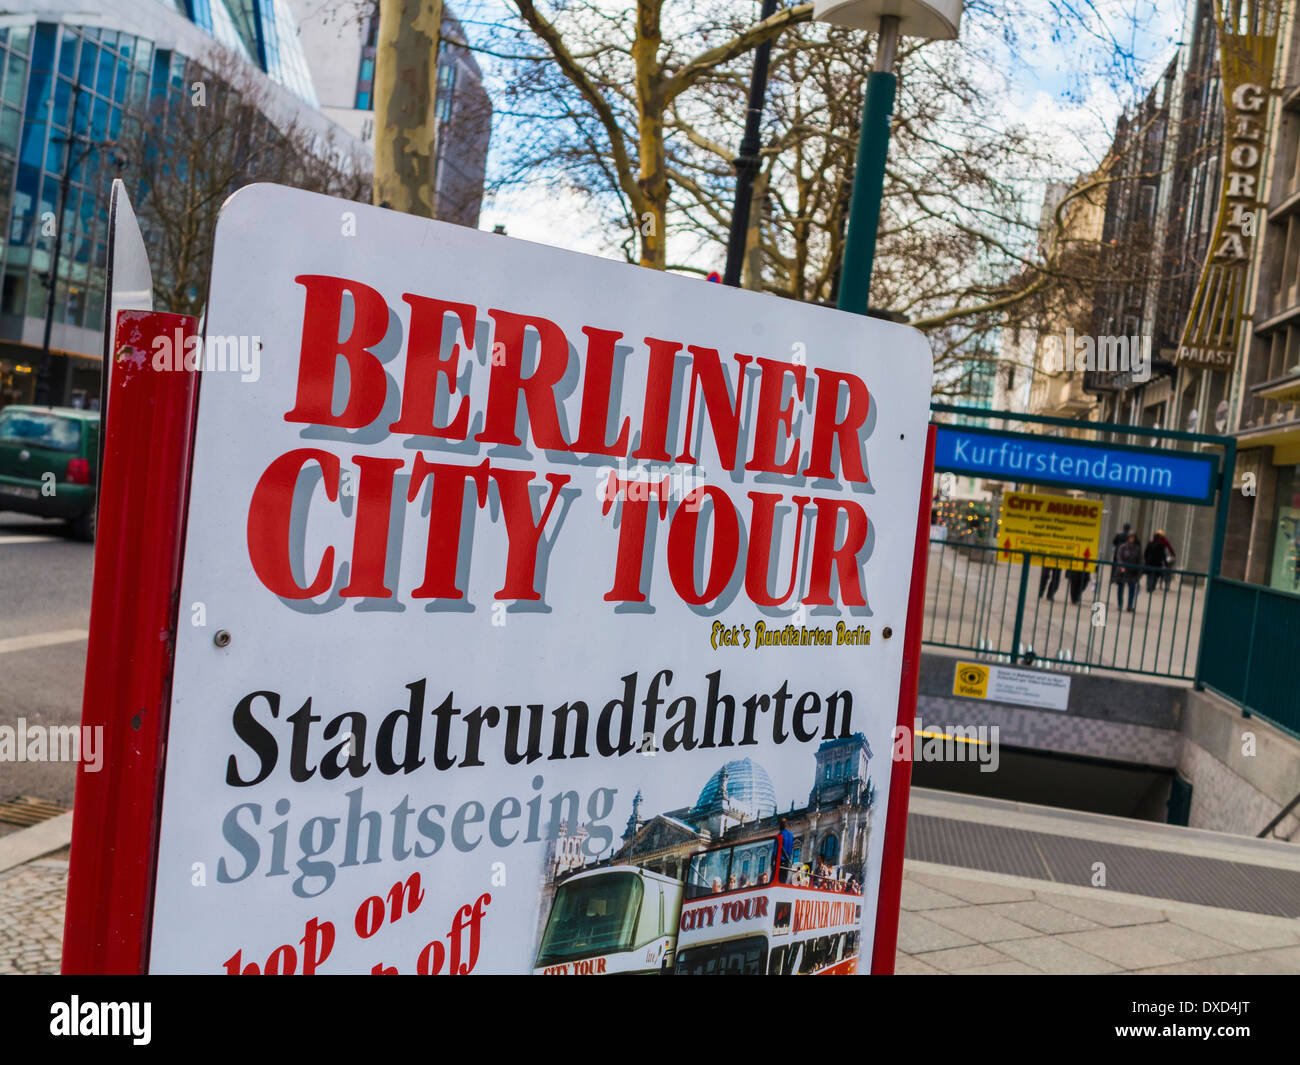 Allemagne - Berlin City Tour signer et entrée de la station de métro Kufurstenddamm, Berlin, Germany, Europe Banque D'Images